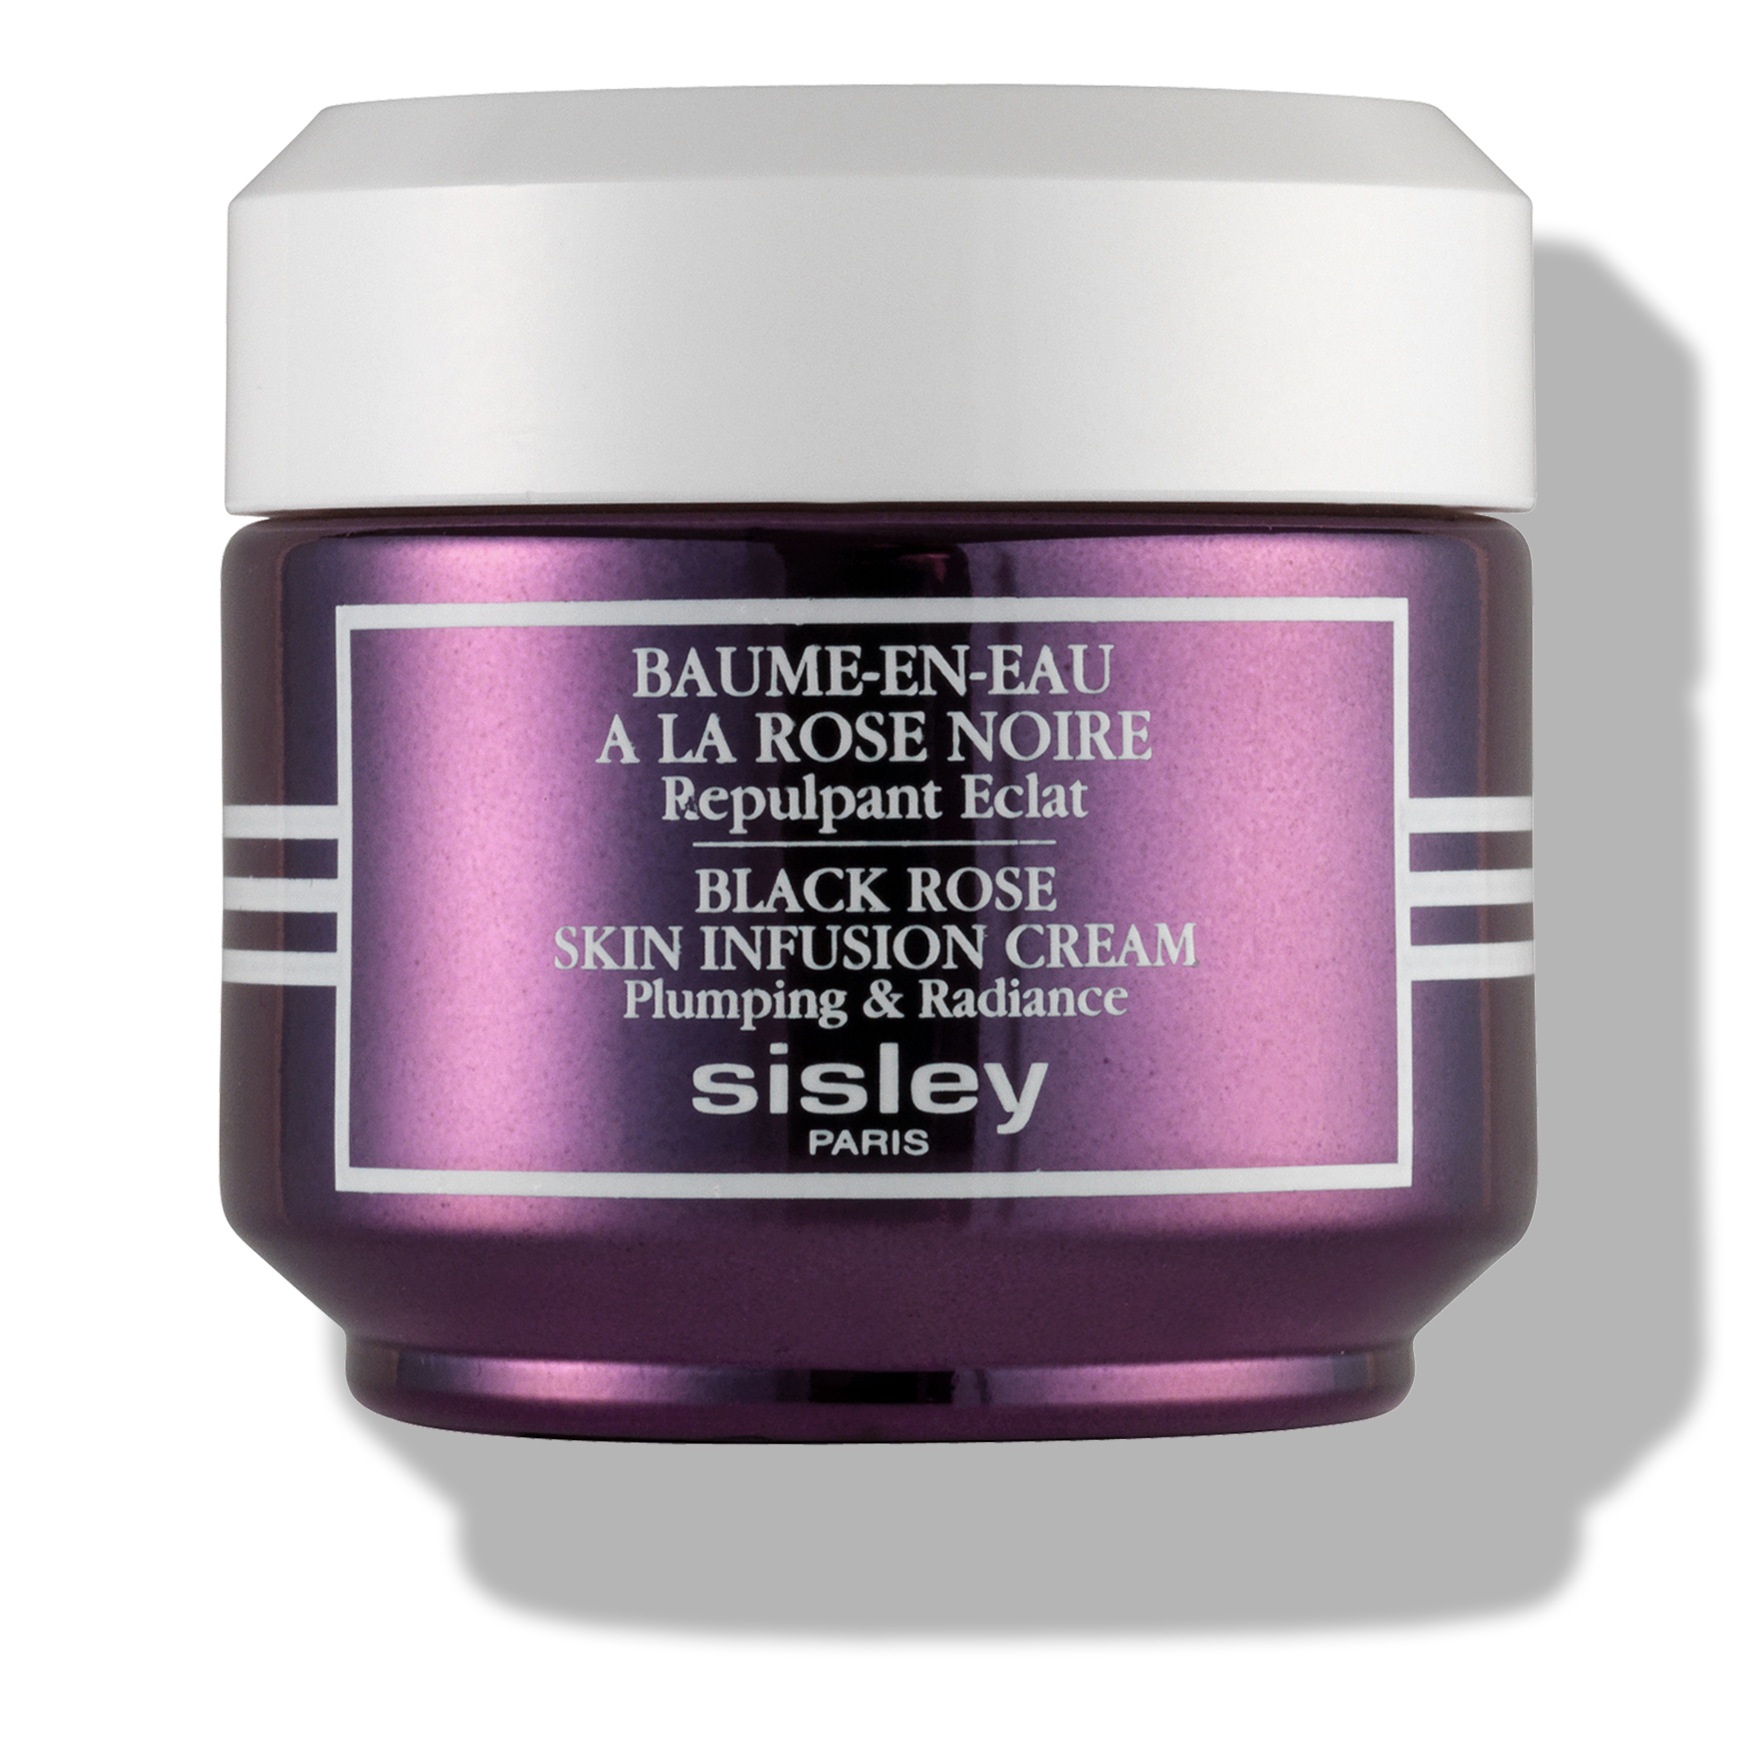 Sisley-Paris Black Rose Skin Infusion Cream | Space NK